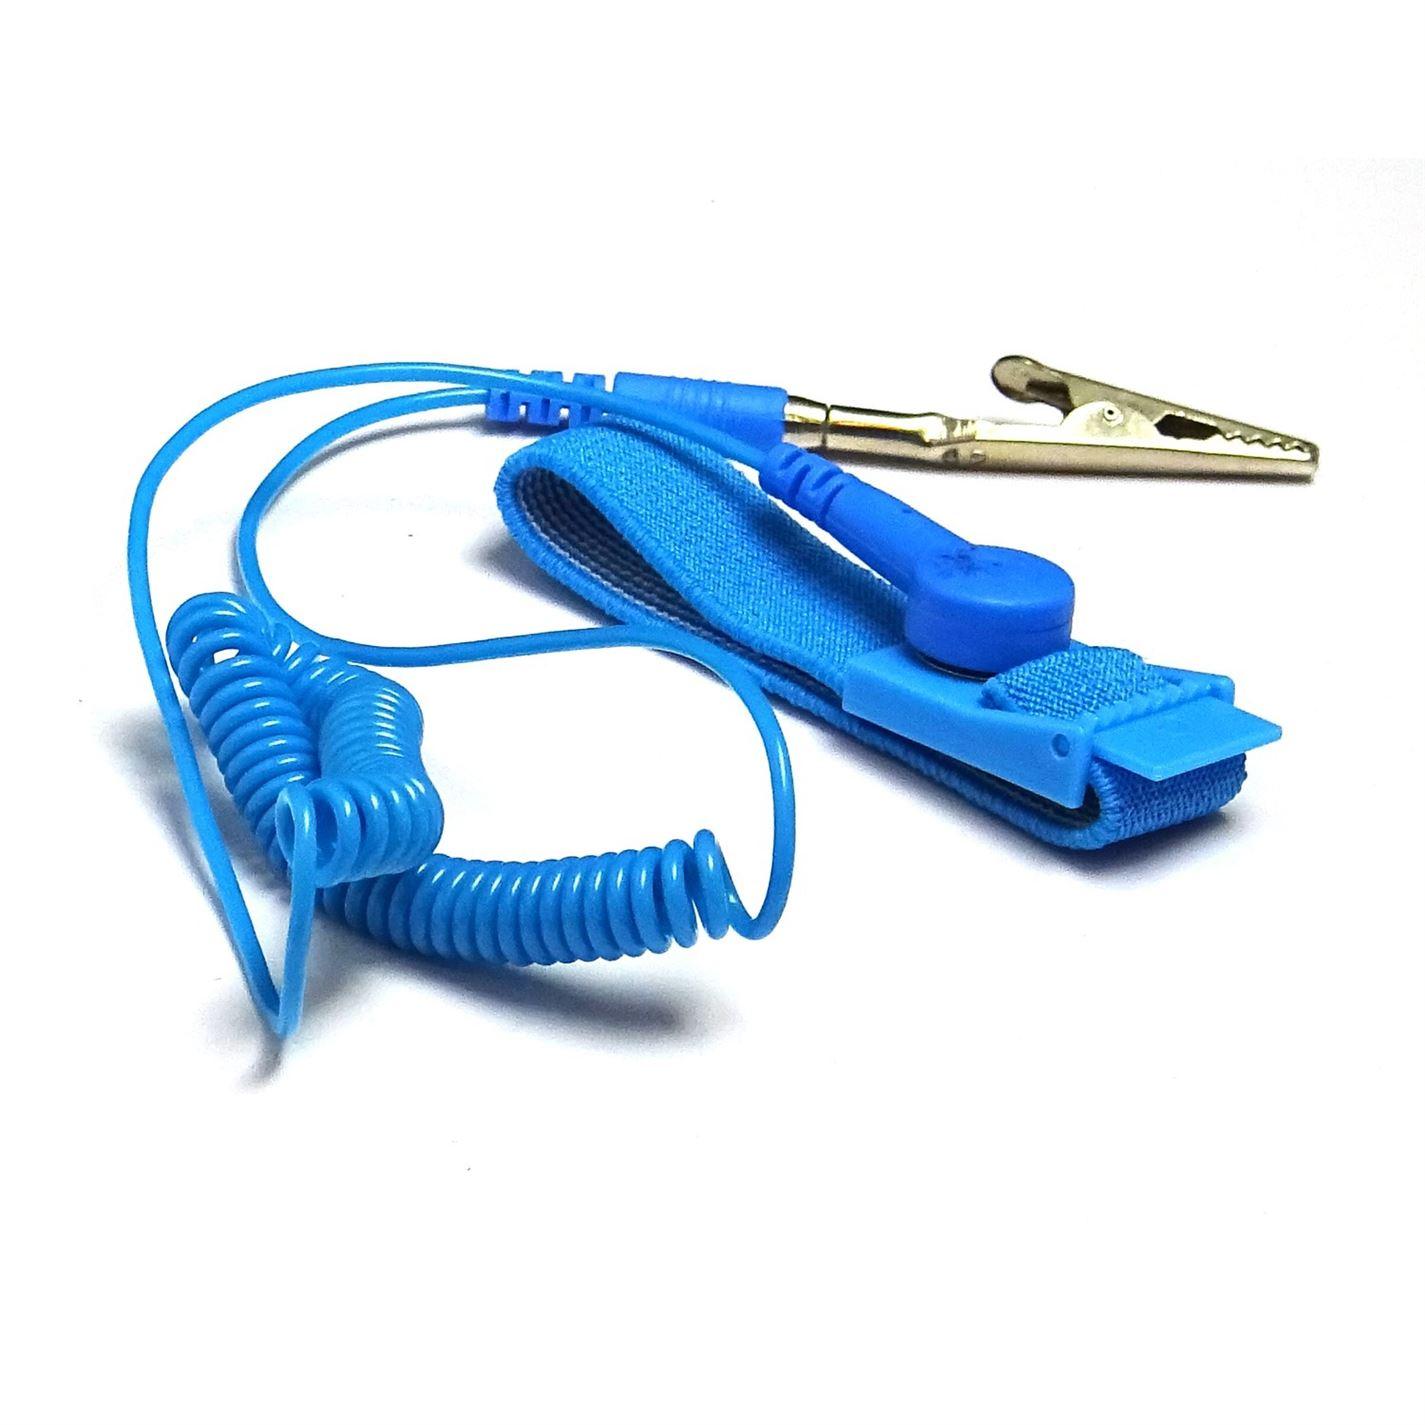 Blue 1.8m Anti-Static ESD Adjustable Wrist Strap Grounding Discharge - UK Seller